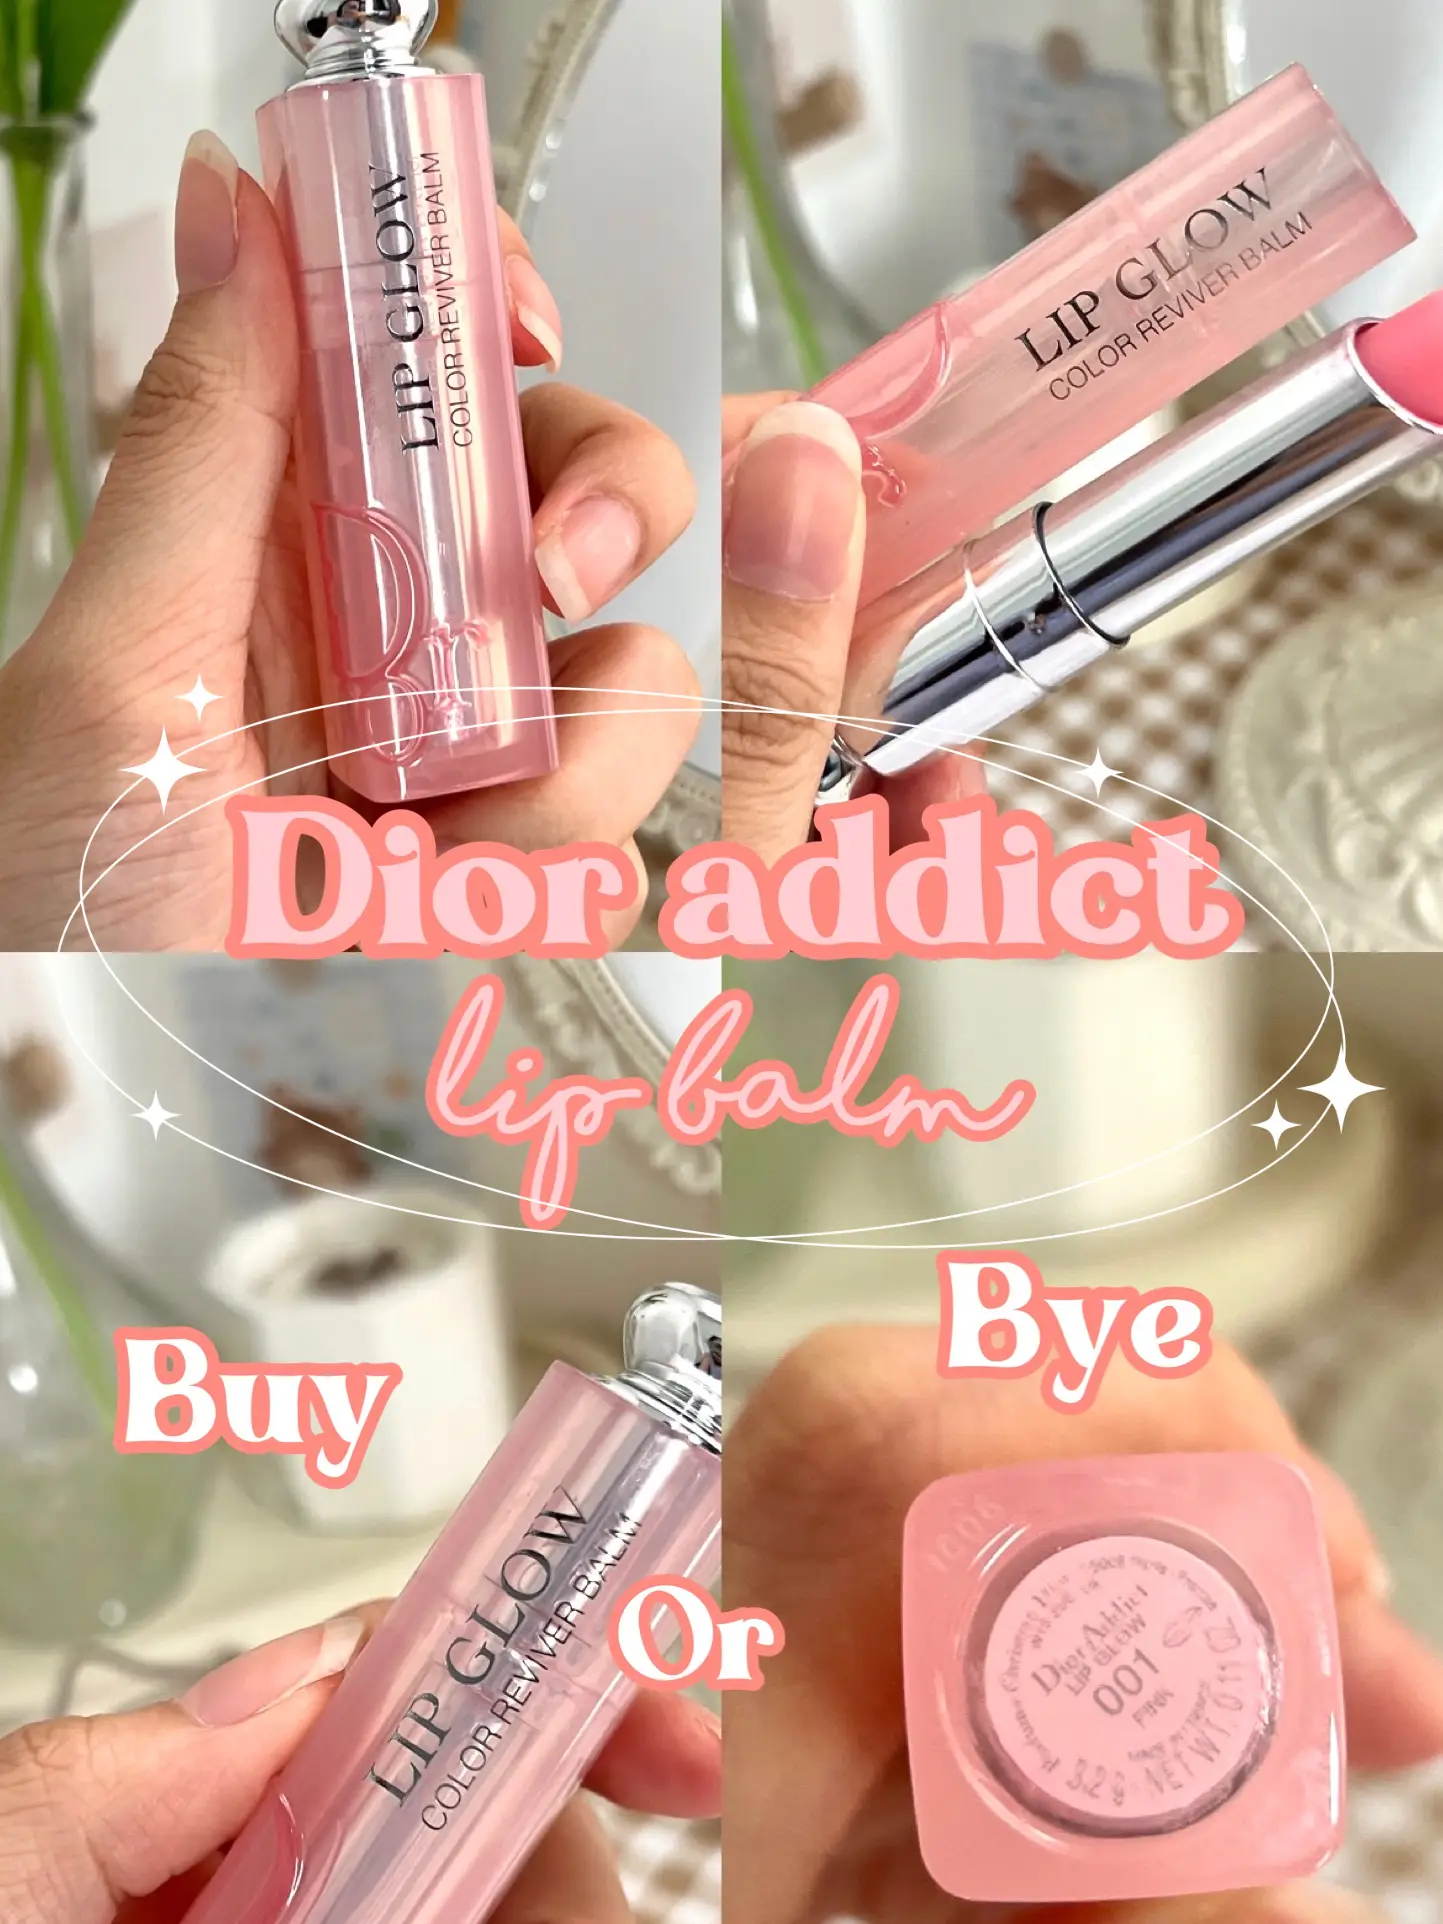 Dior Addict Lip Balm ✨ BUY OR BYE?